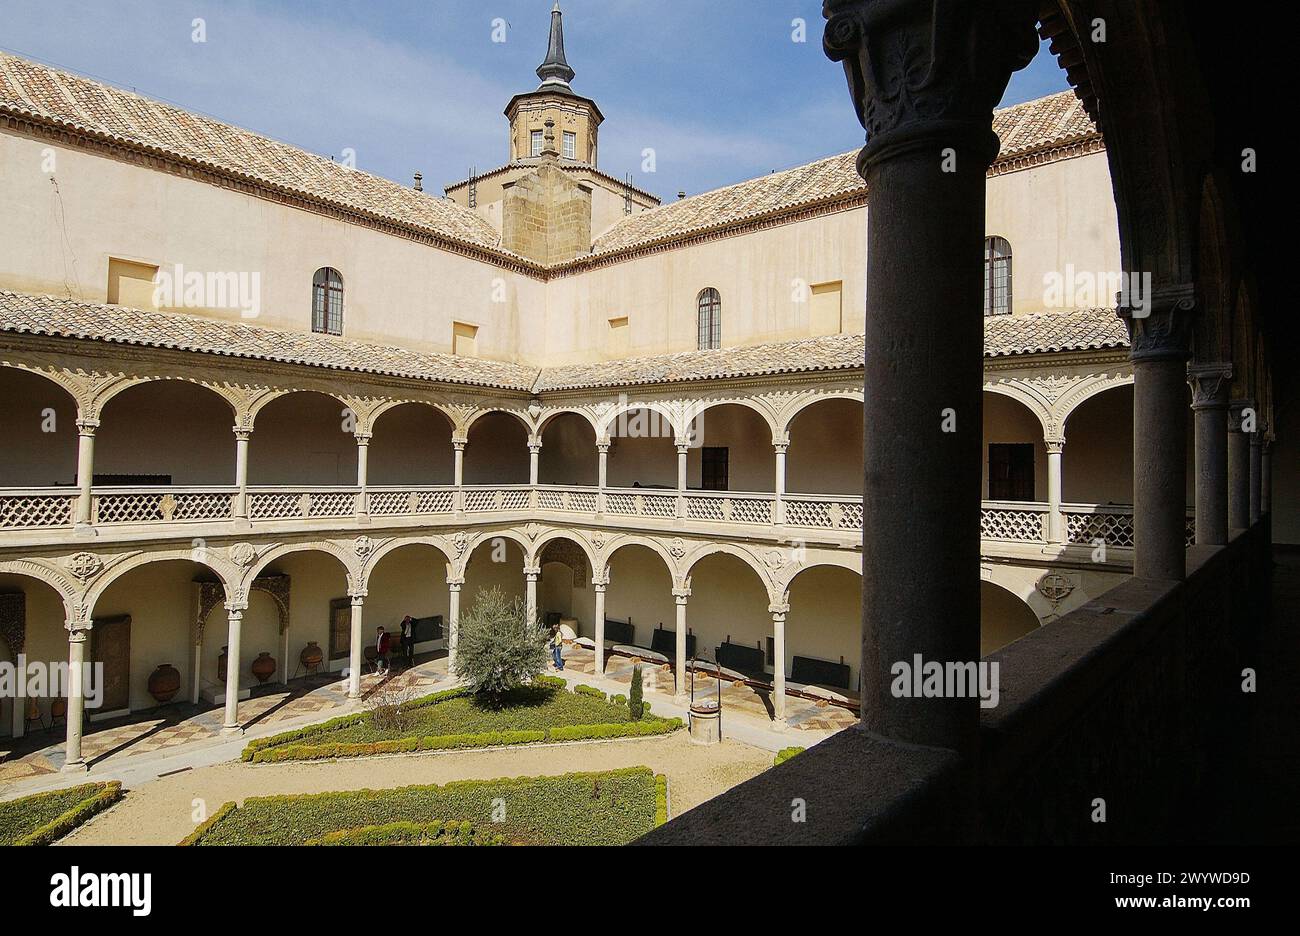 Plateresque courtyard at Museo de Santa Cruz founded by Cardinal Pedro González de Mendoza and built 16th century by Alonso de Covarrubias. Toledo. Castilla-La Mancha, Spain. Stock Photo